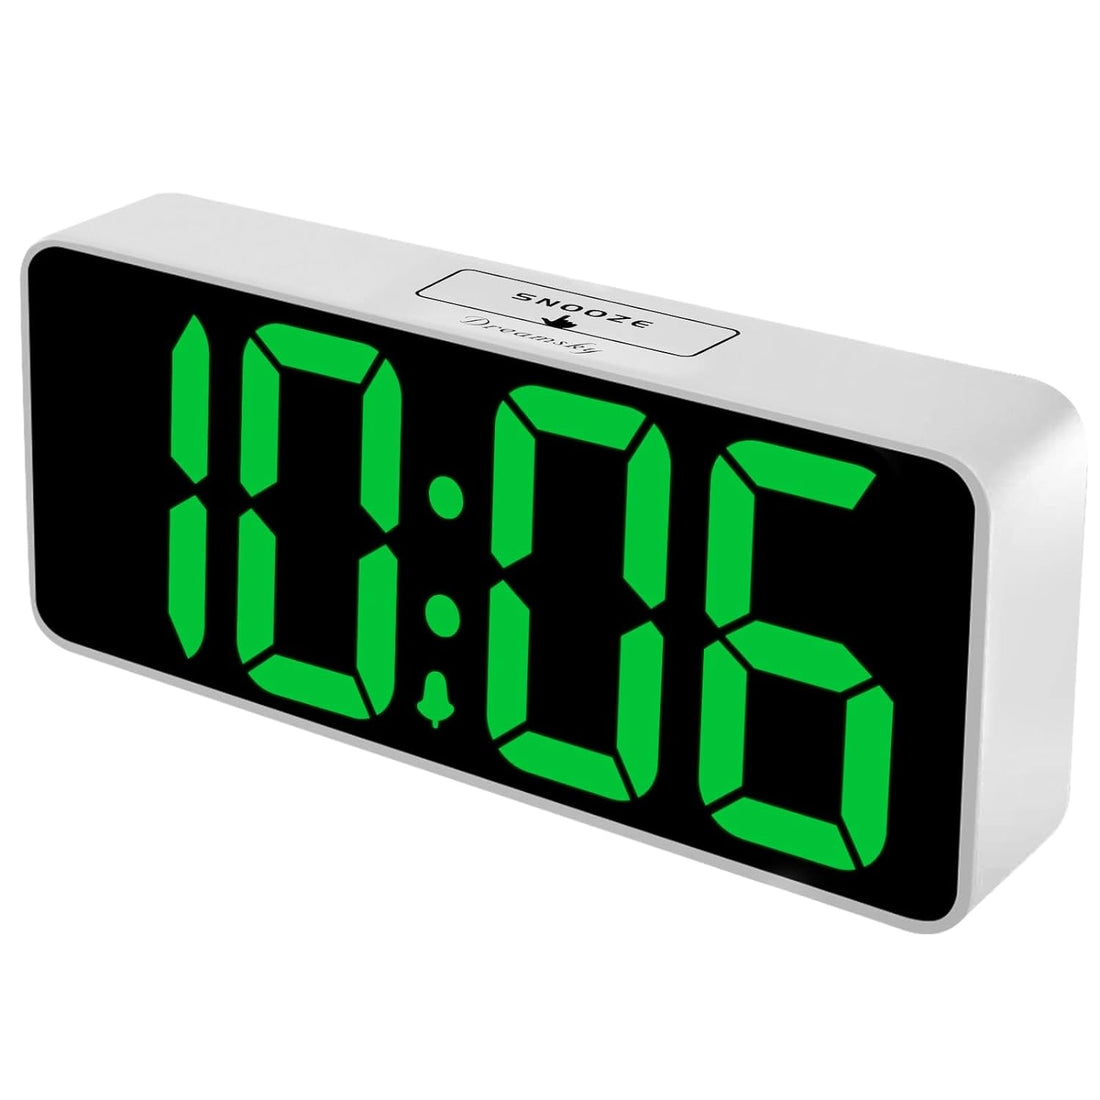 DreamSky 8.9 Inches Large Digital Alarm Clock with USB Charging Port, Fully Adjustable Dimmer, Battery Backup, 12/24Hr, Snooze, Adjustable Alarm Volume, Bedroom Alarm Clocks (White Case + Green Digit)